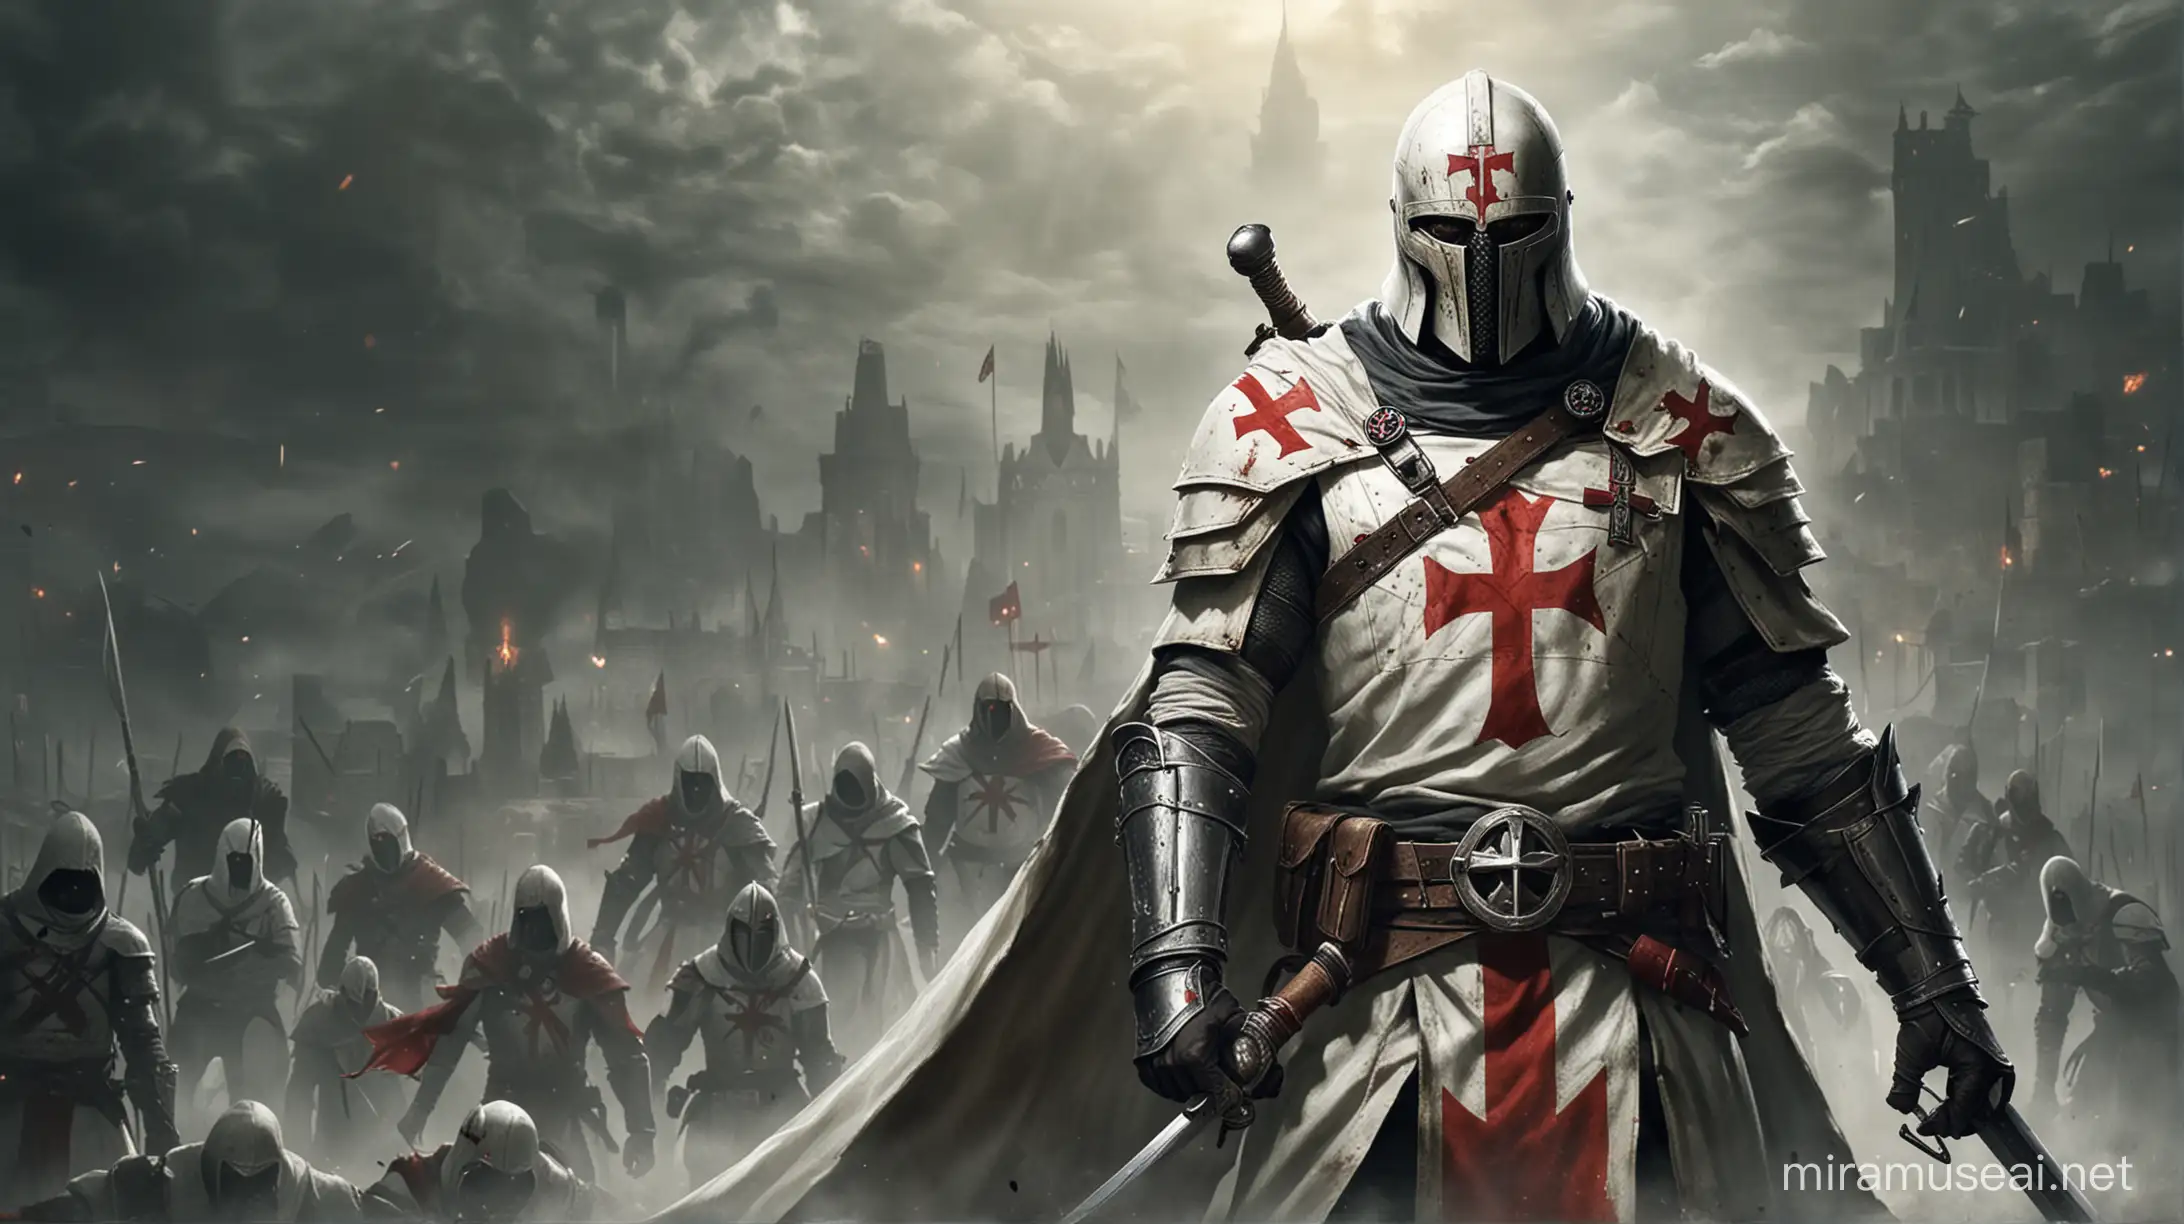 Medieval Templar Knight in Shining Armor with Sword